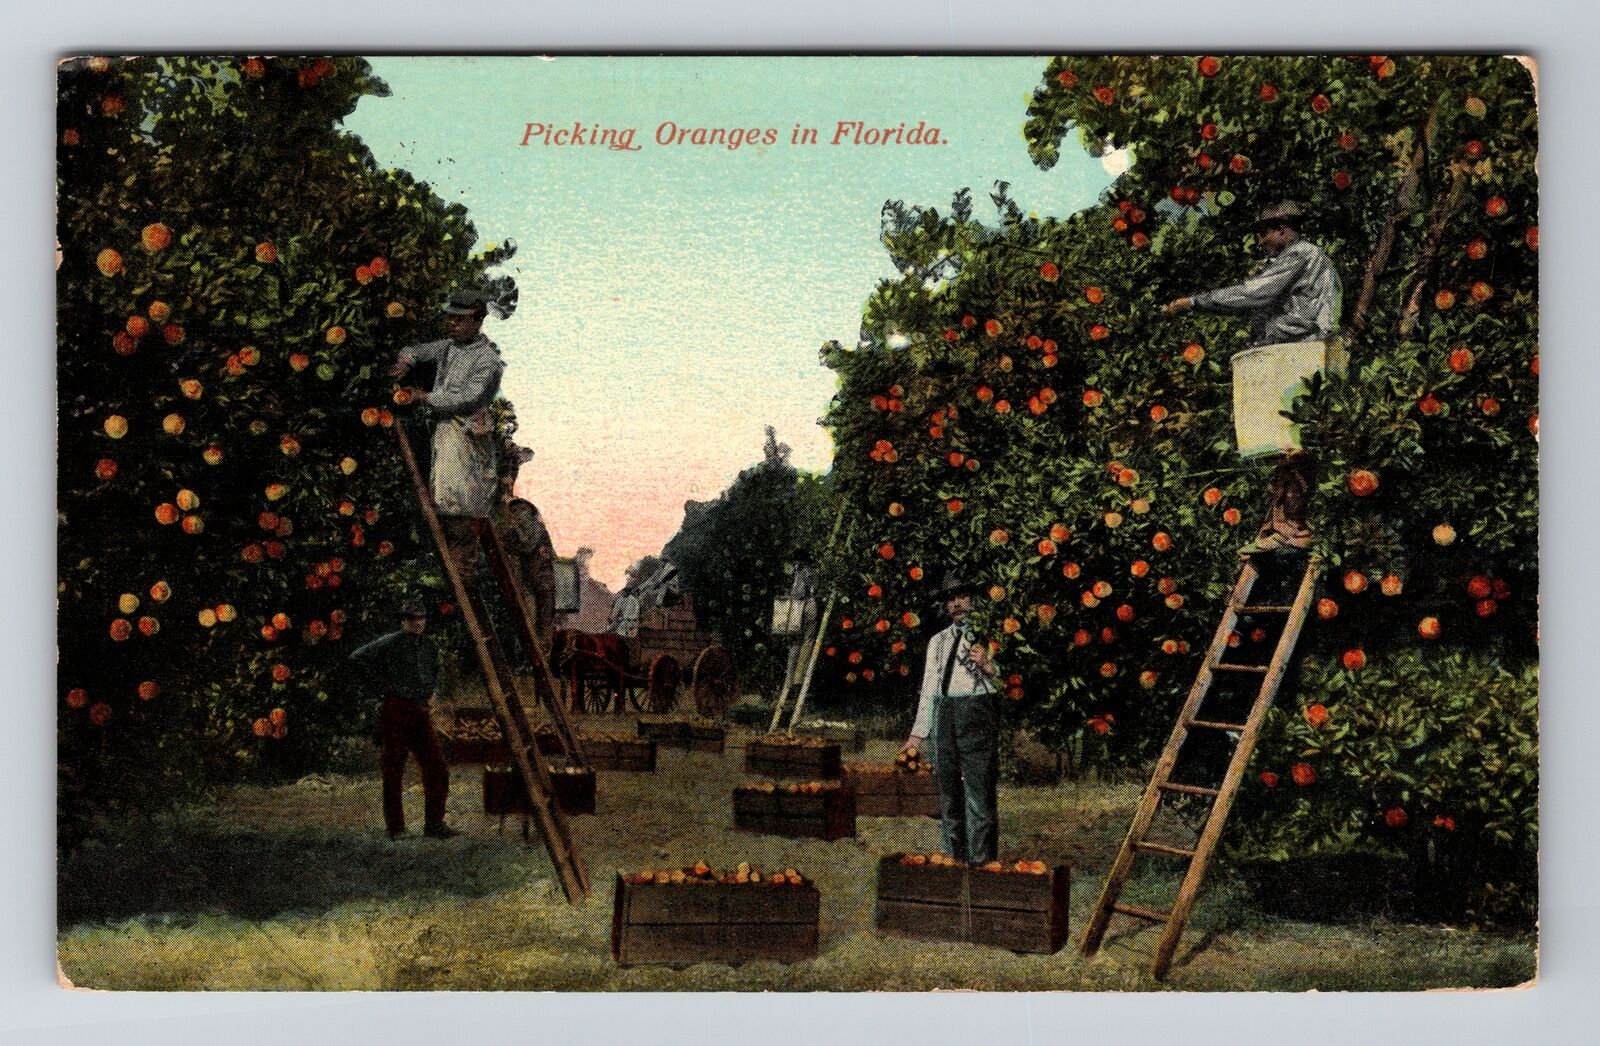 FL-Florida, Scenic, People Picking Oranges in Orchard, c1912, Vintage Postcard